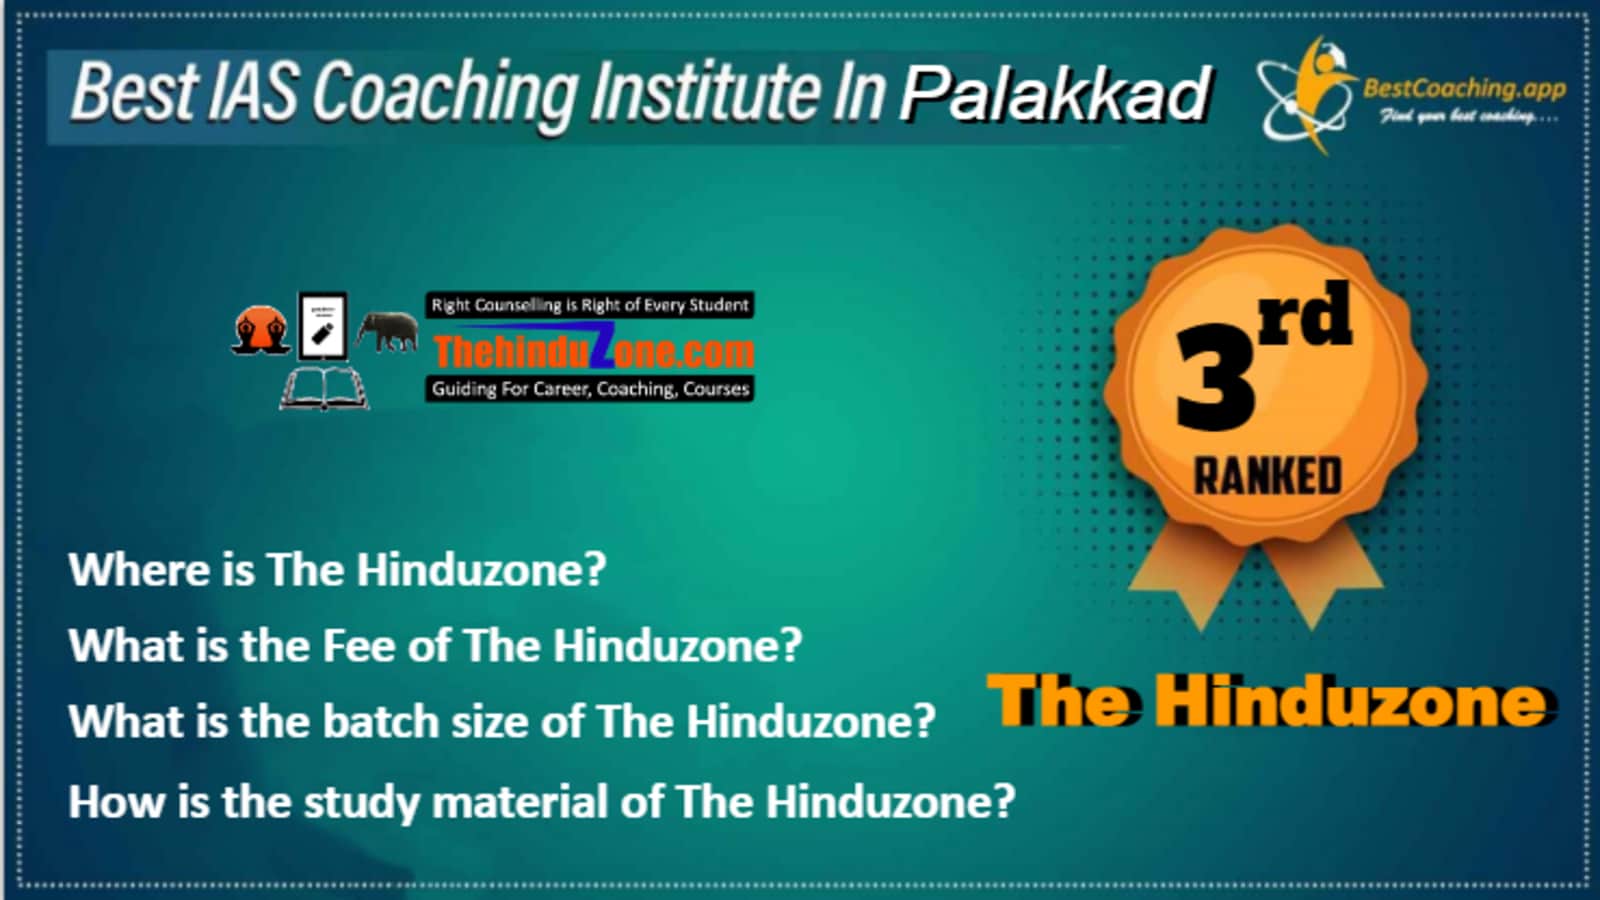 Rank 3 Best IAS Coaching in Palakkad